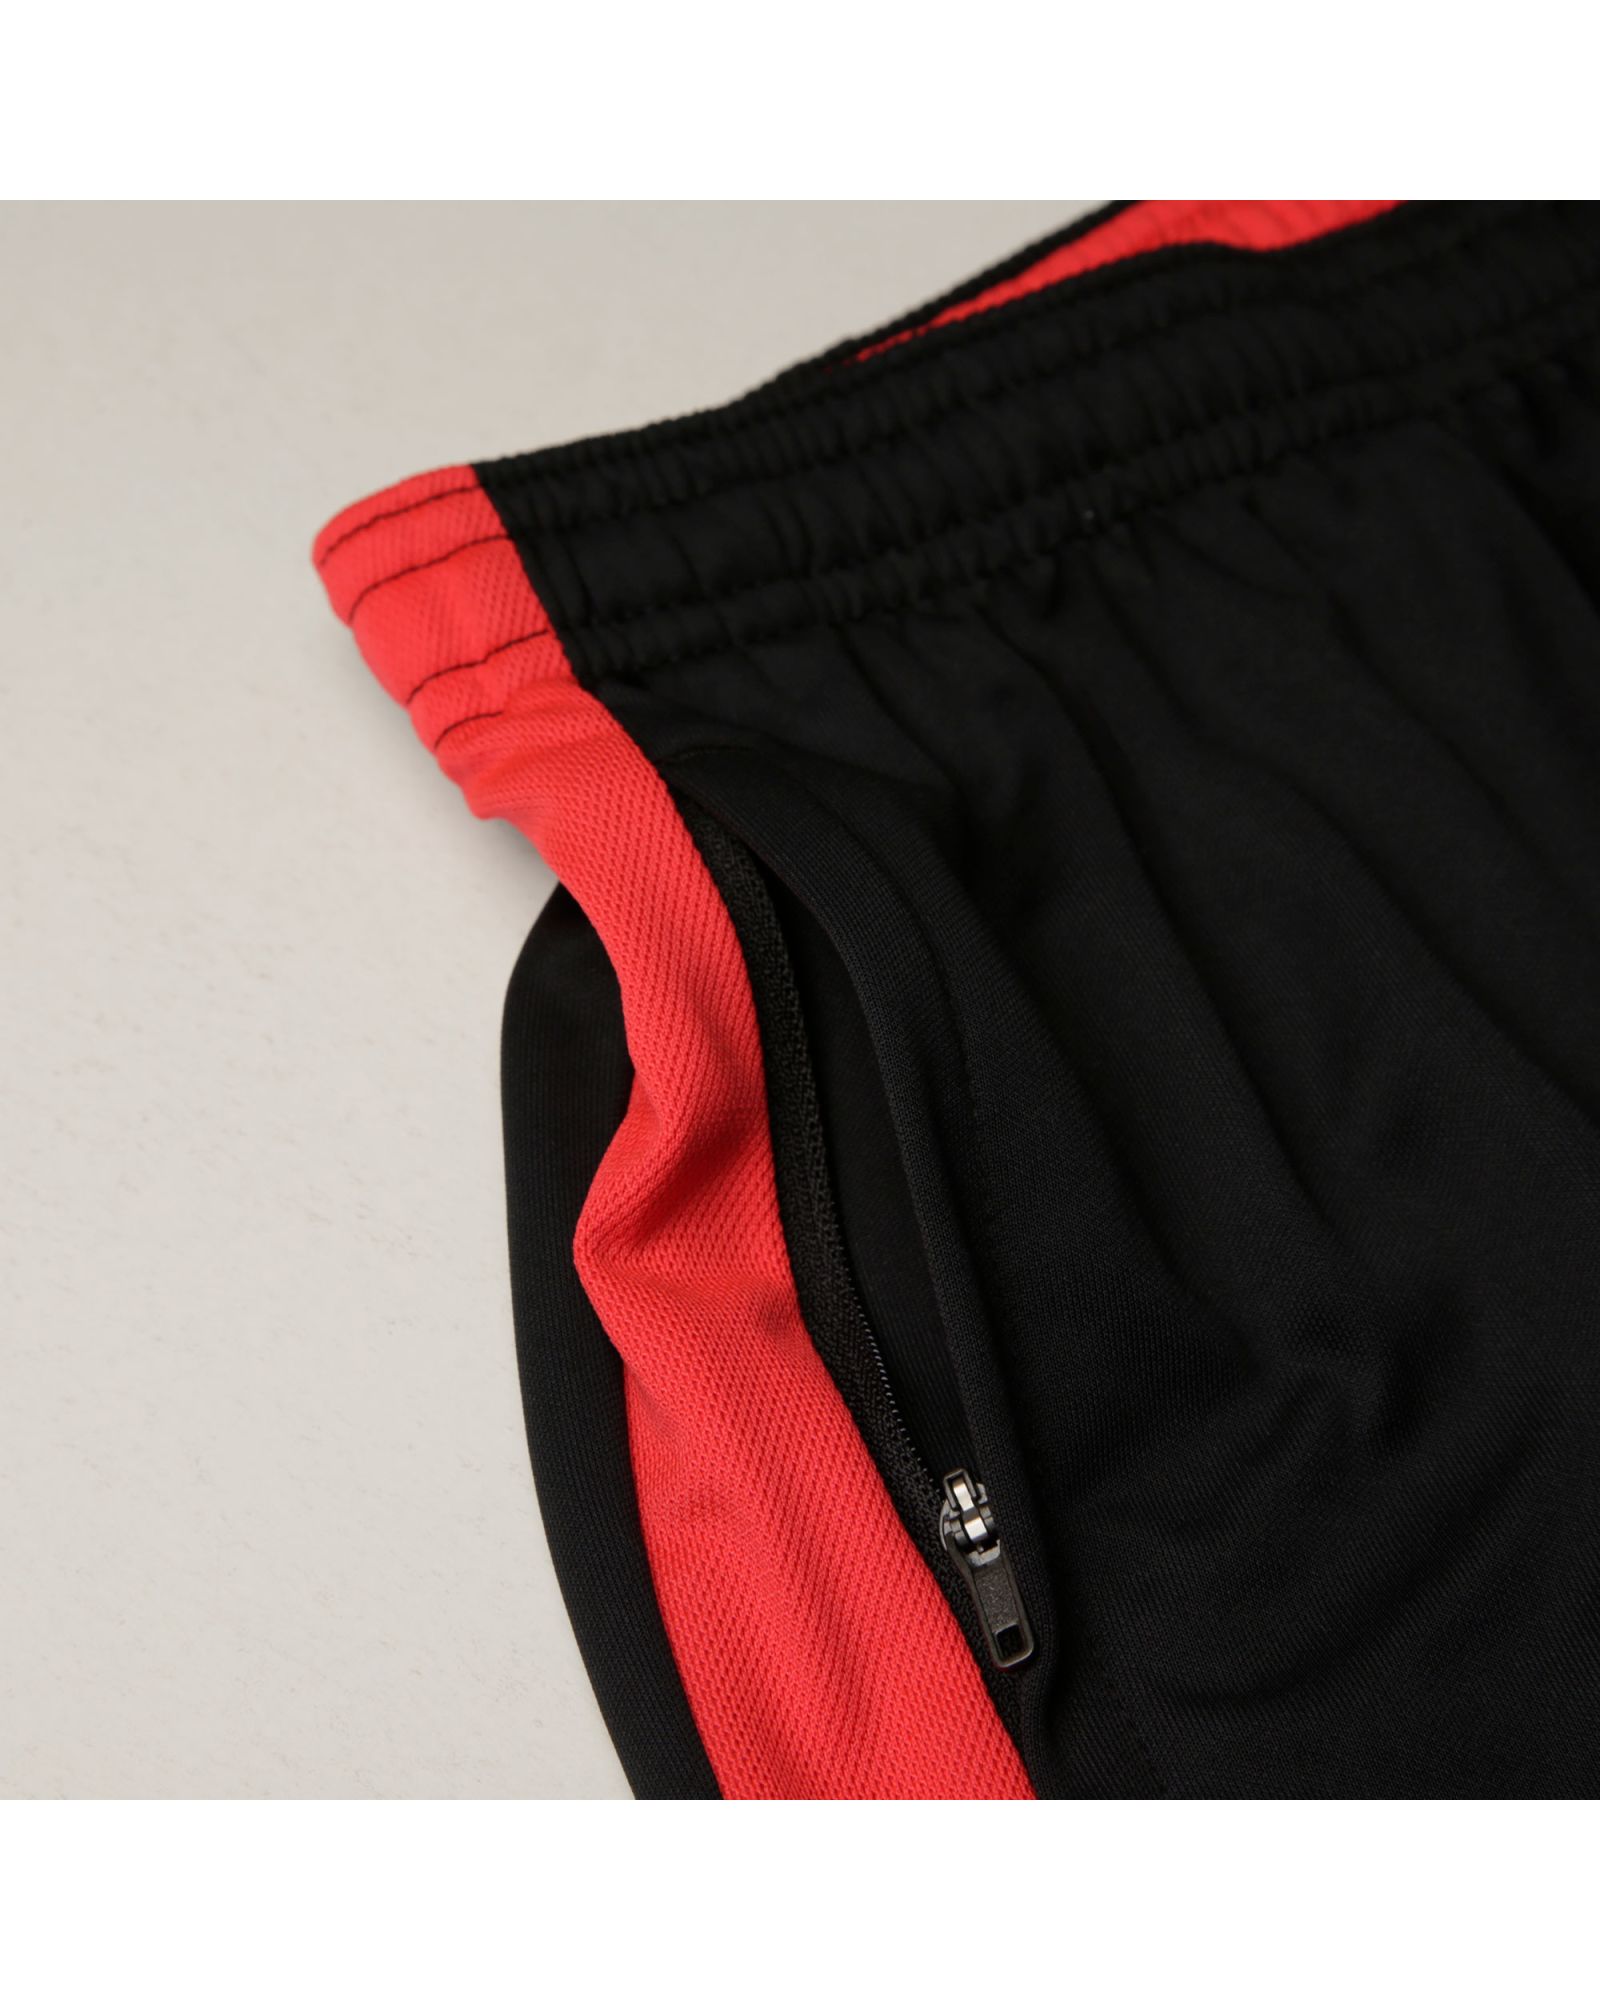 Pantalón de Training Dry Academy Negro Rojo - Fútbol Factory